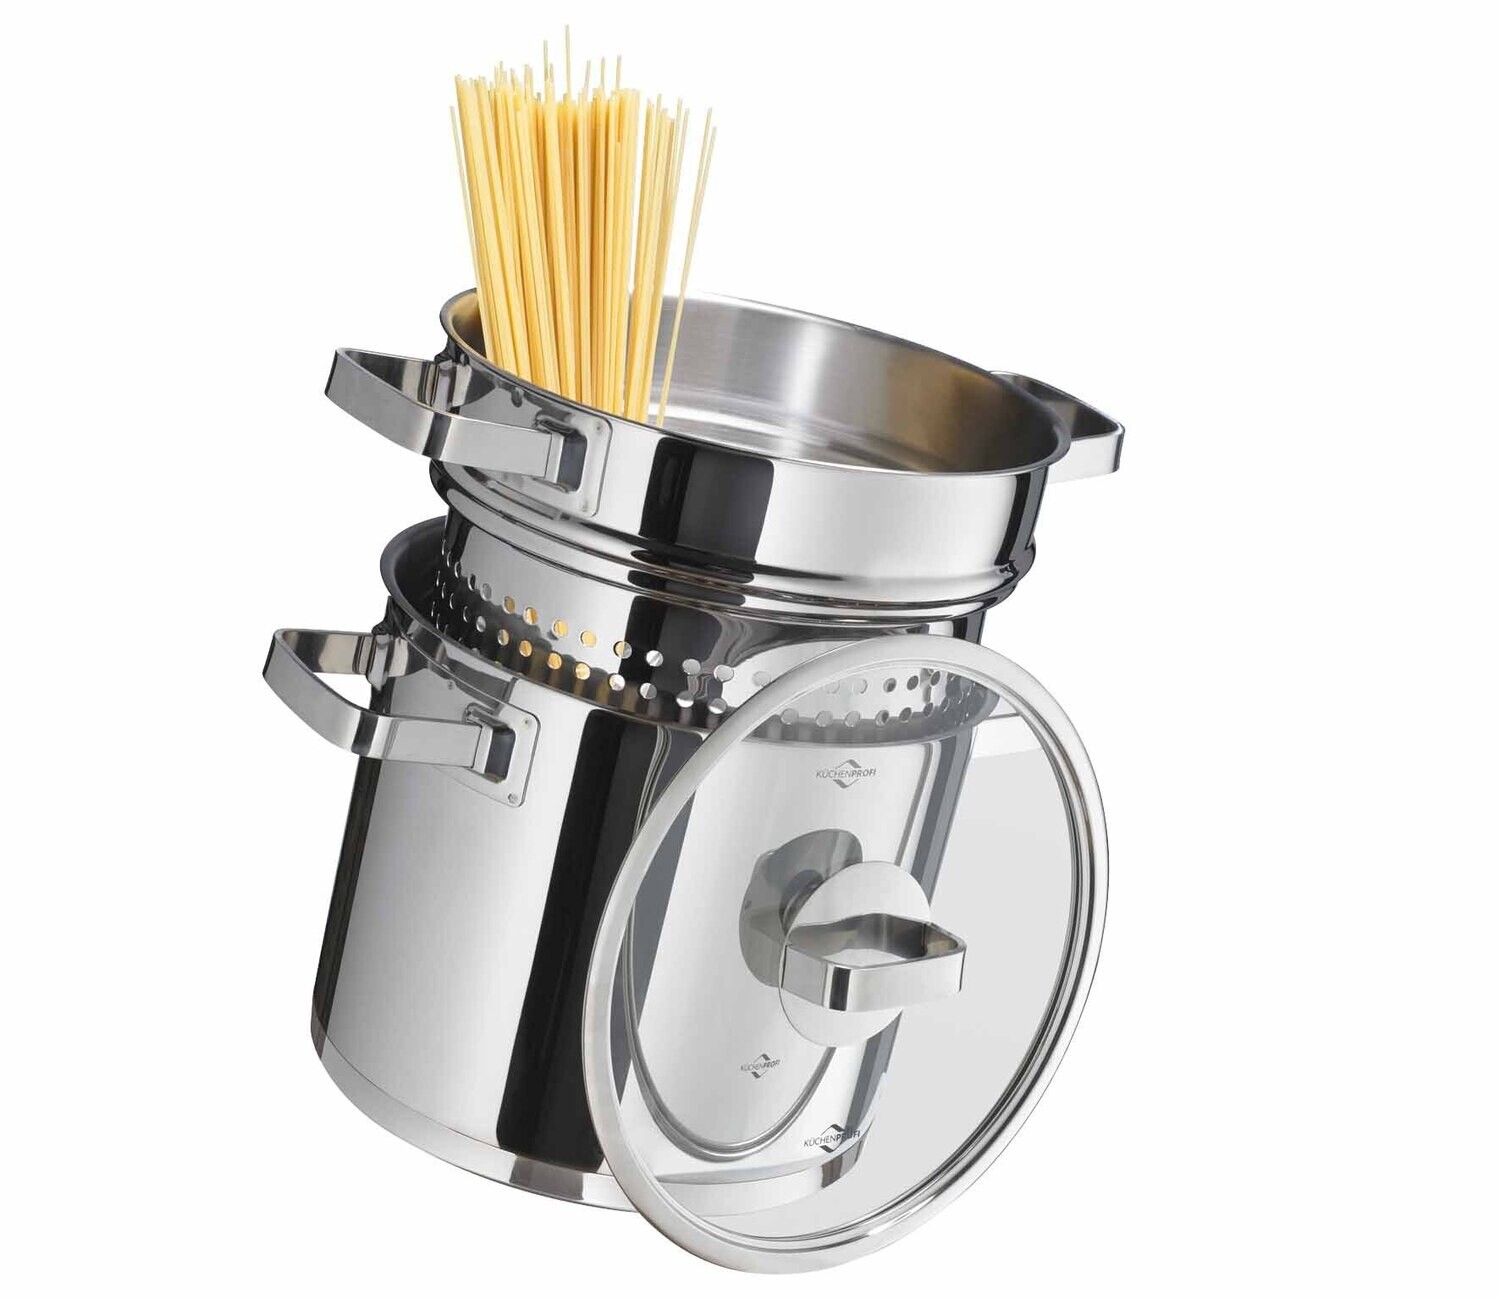 Küchenprofi - Kochtopf mit Pastaeinsatz 23 cm